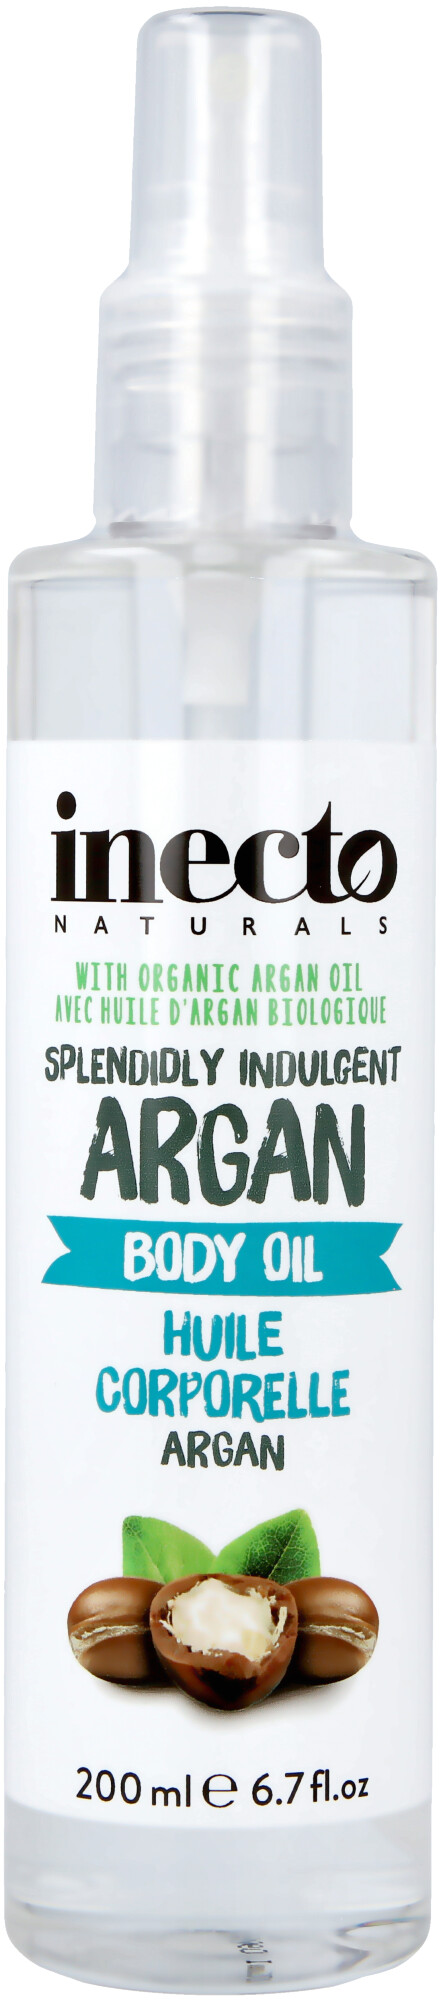 Inecto Naturals Argan Body Oil 200ml